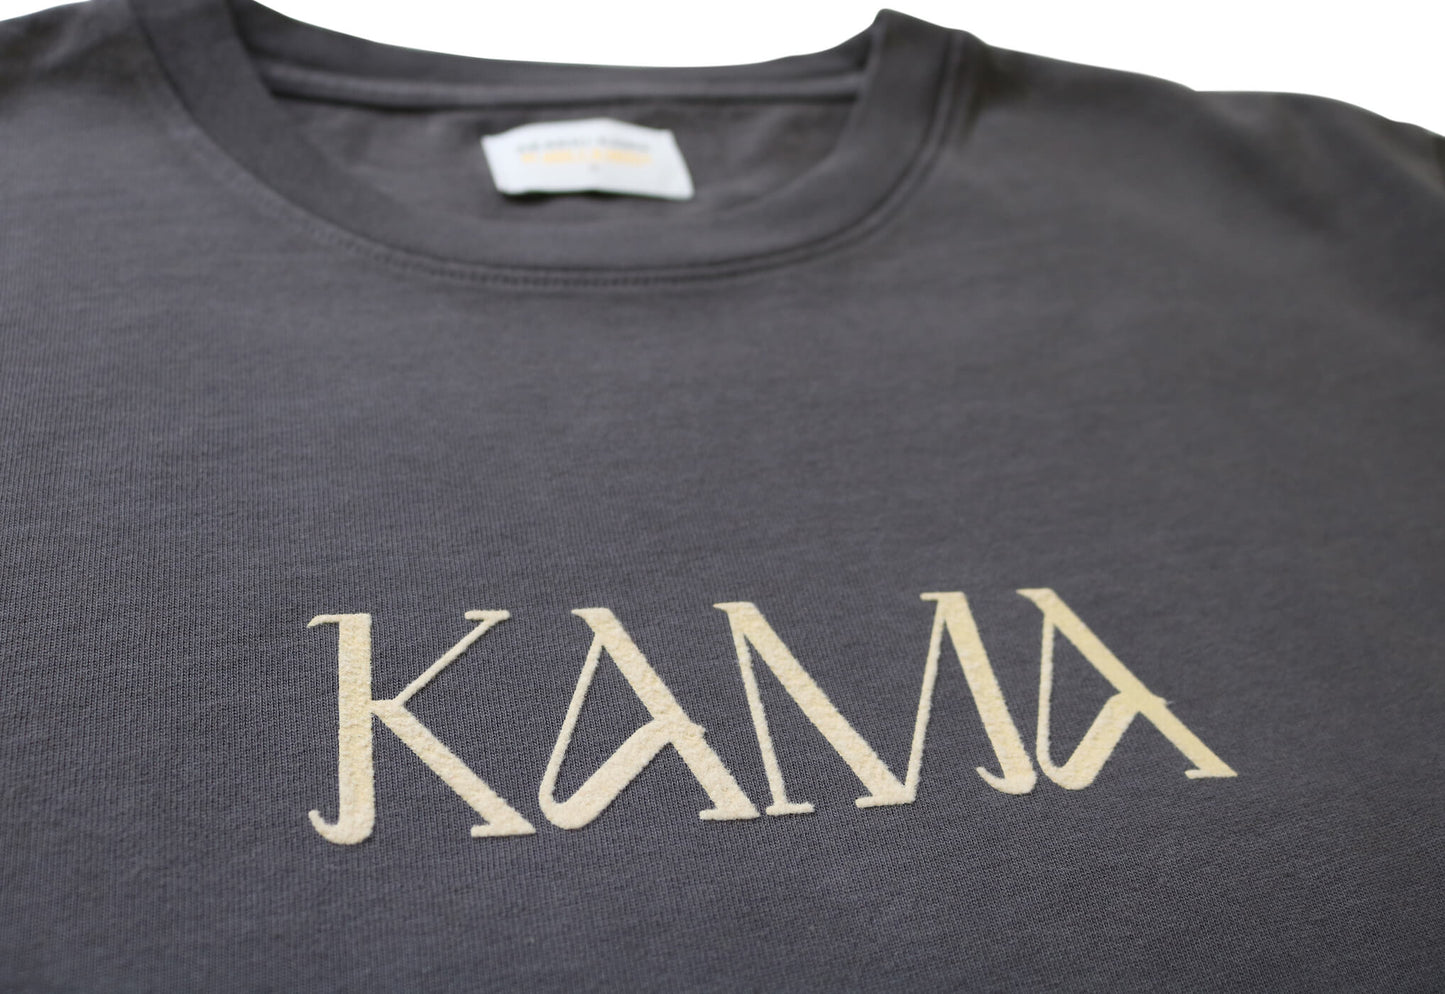 KAMA Flock AKASHI-KAMA Tee in Slate | Streetwear Garment Dye Shirt Flocking Print